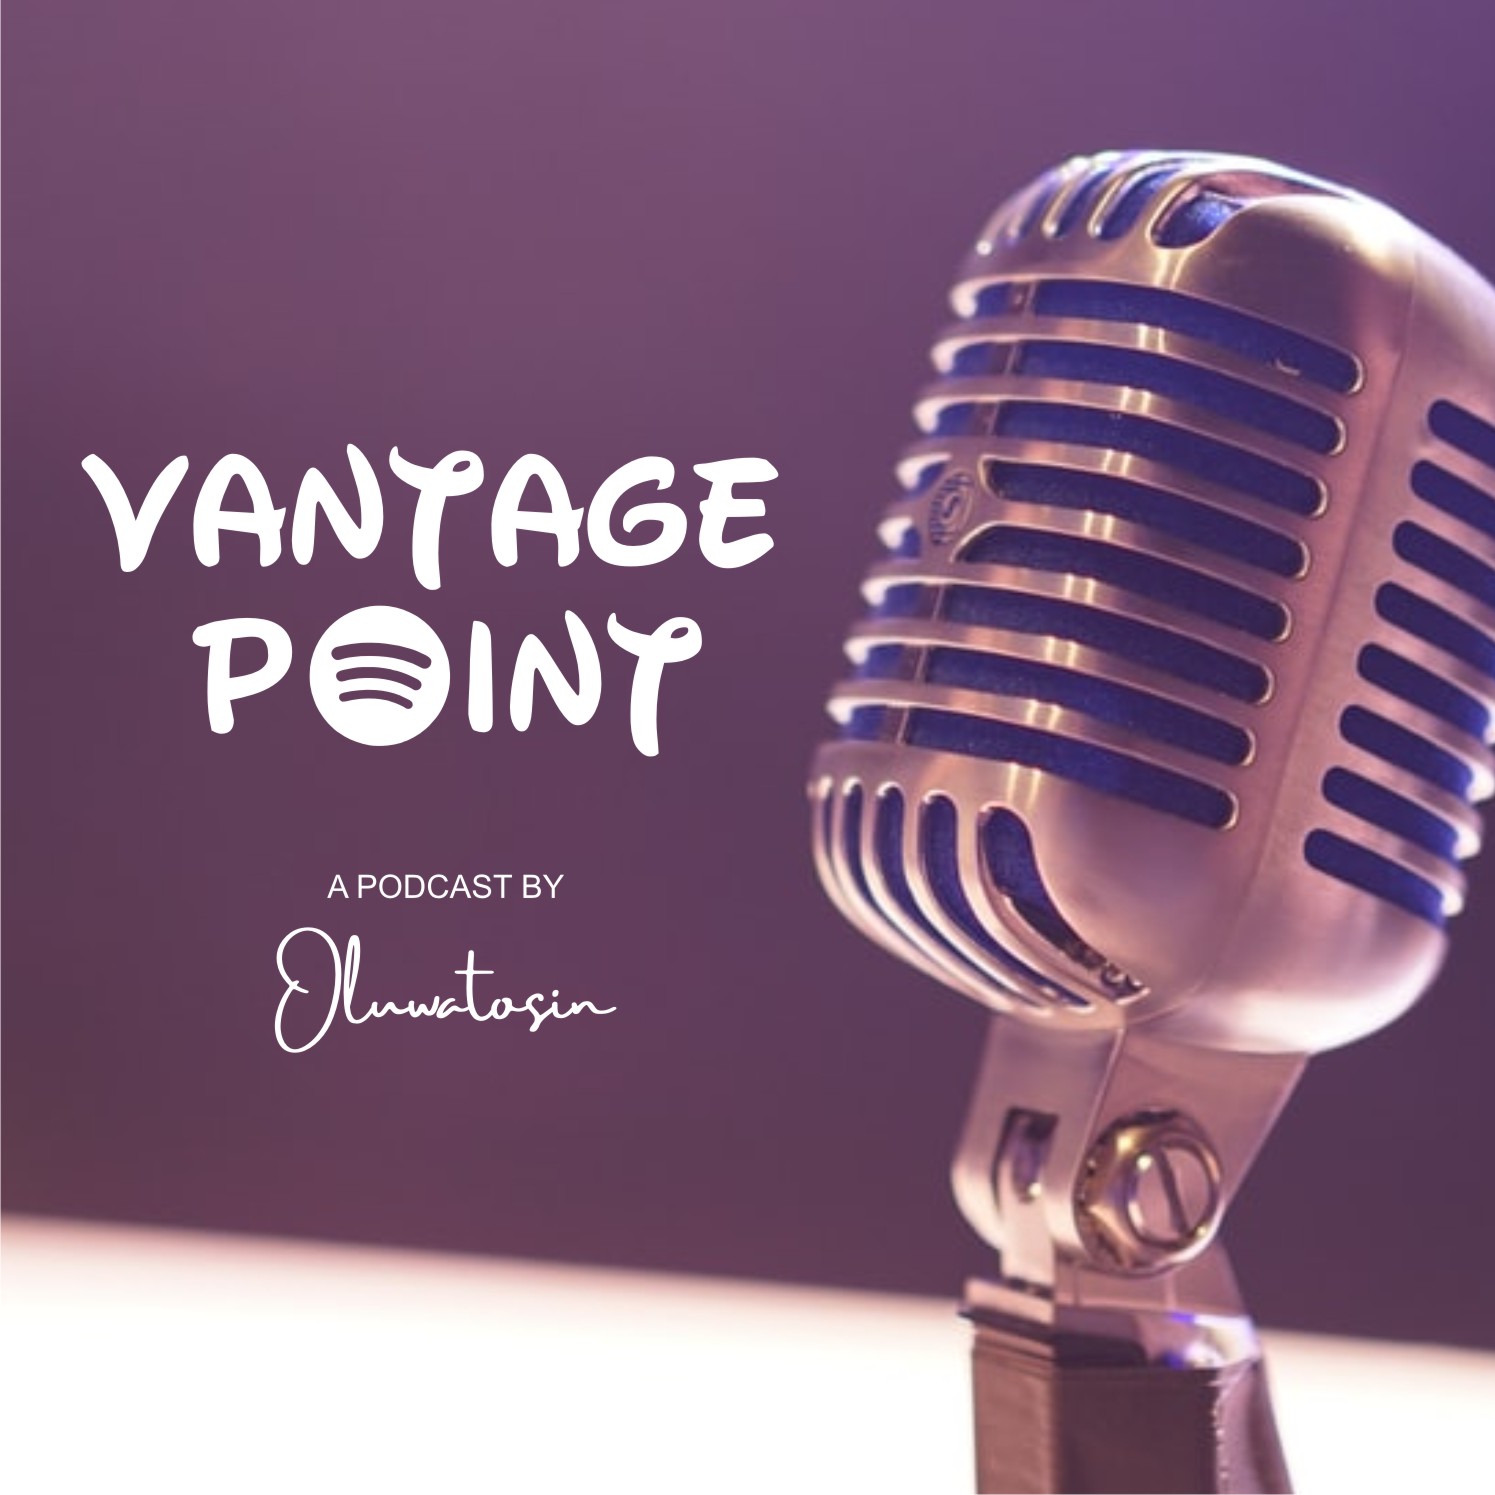 Vantage point podcast